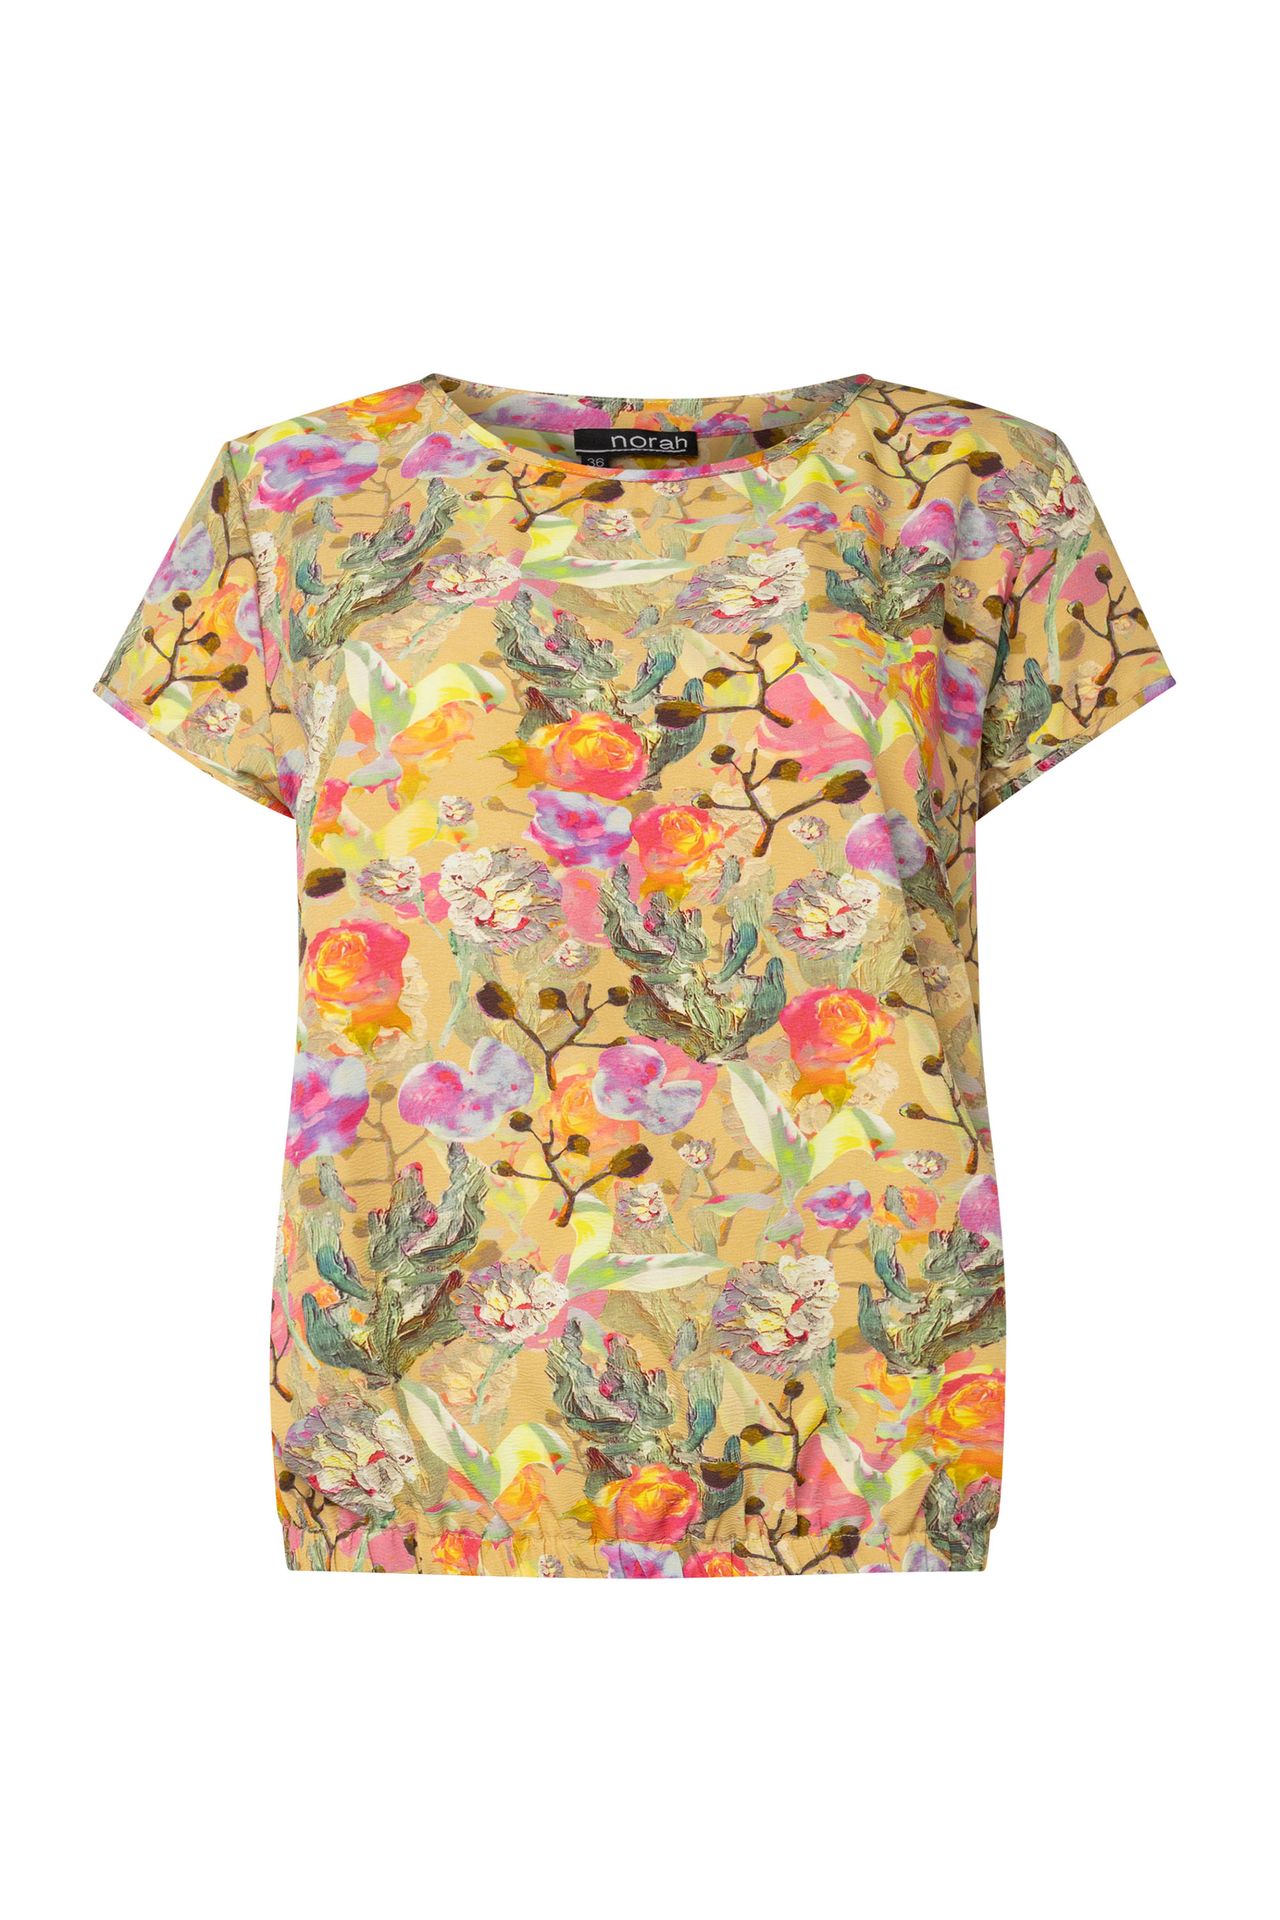 Norah Meerkleurige blouse multicolor 214172-002